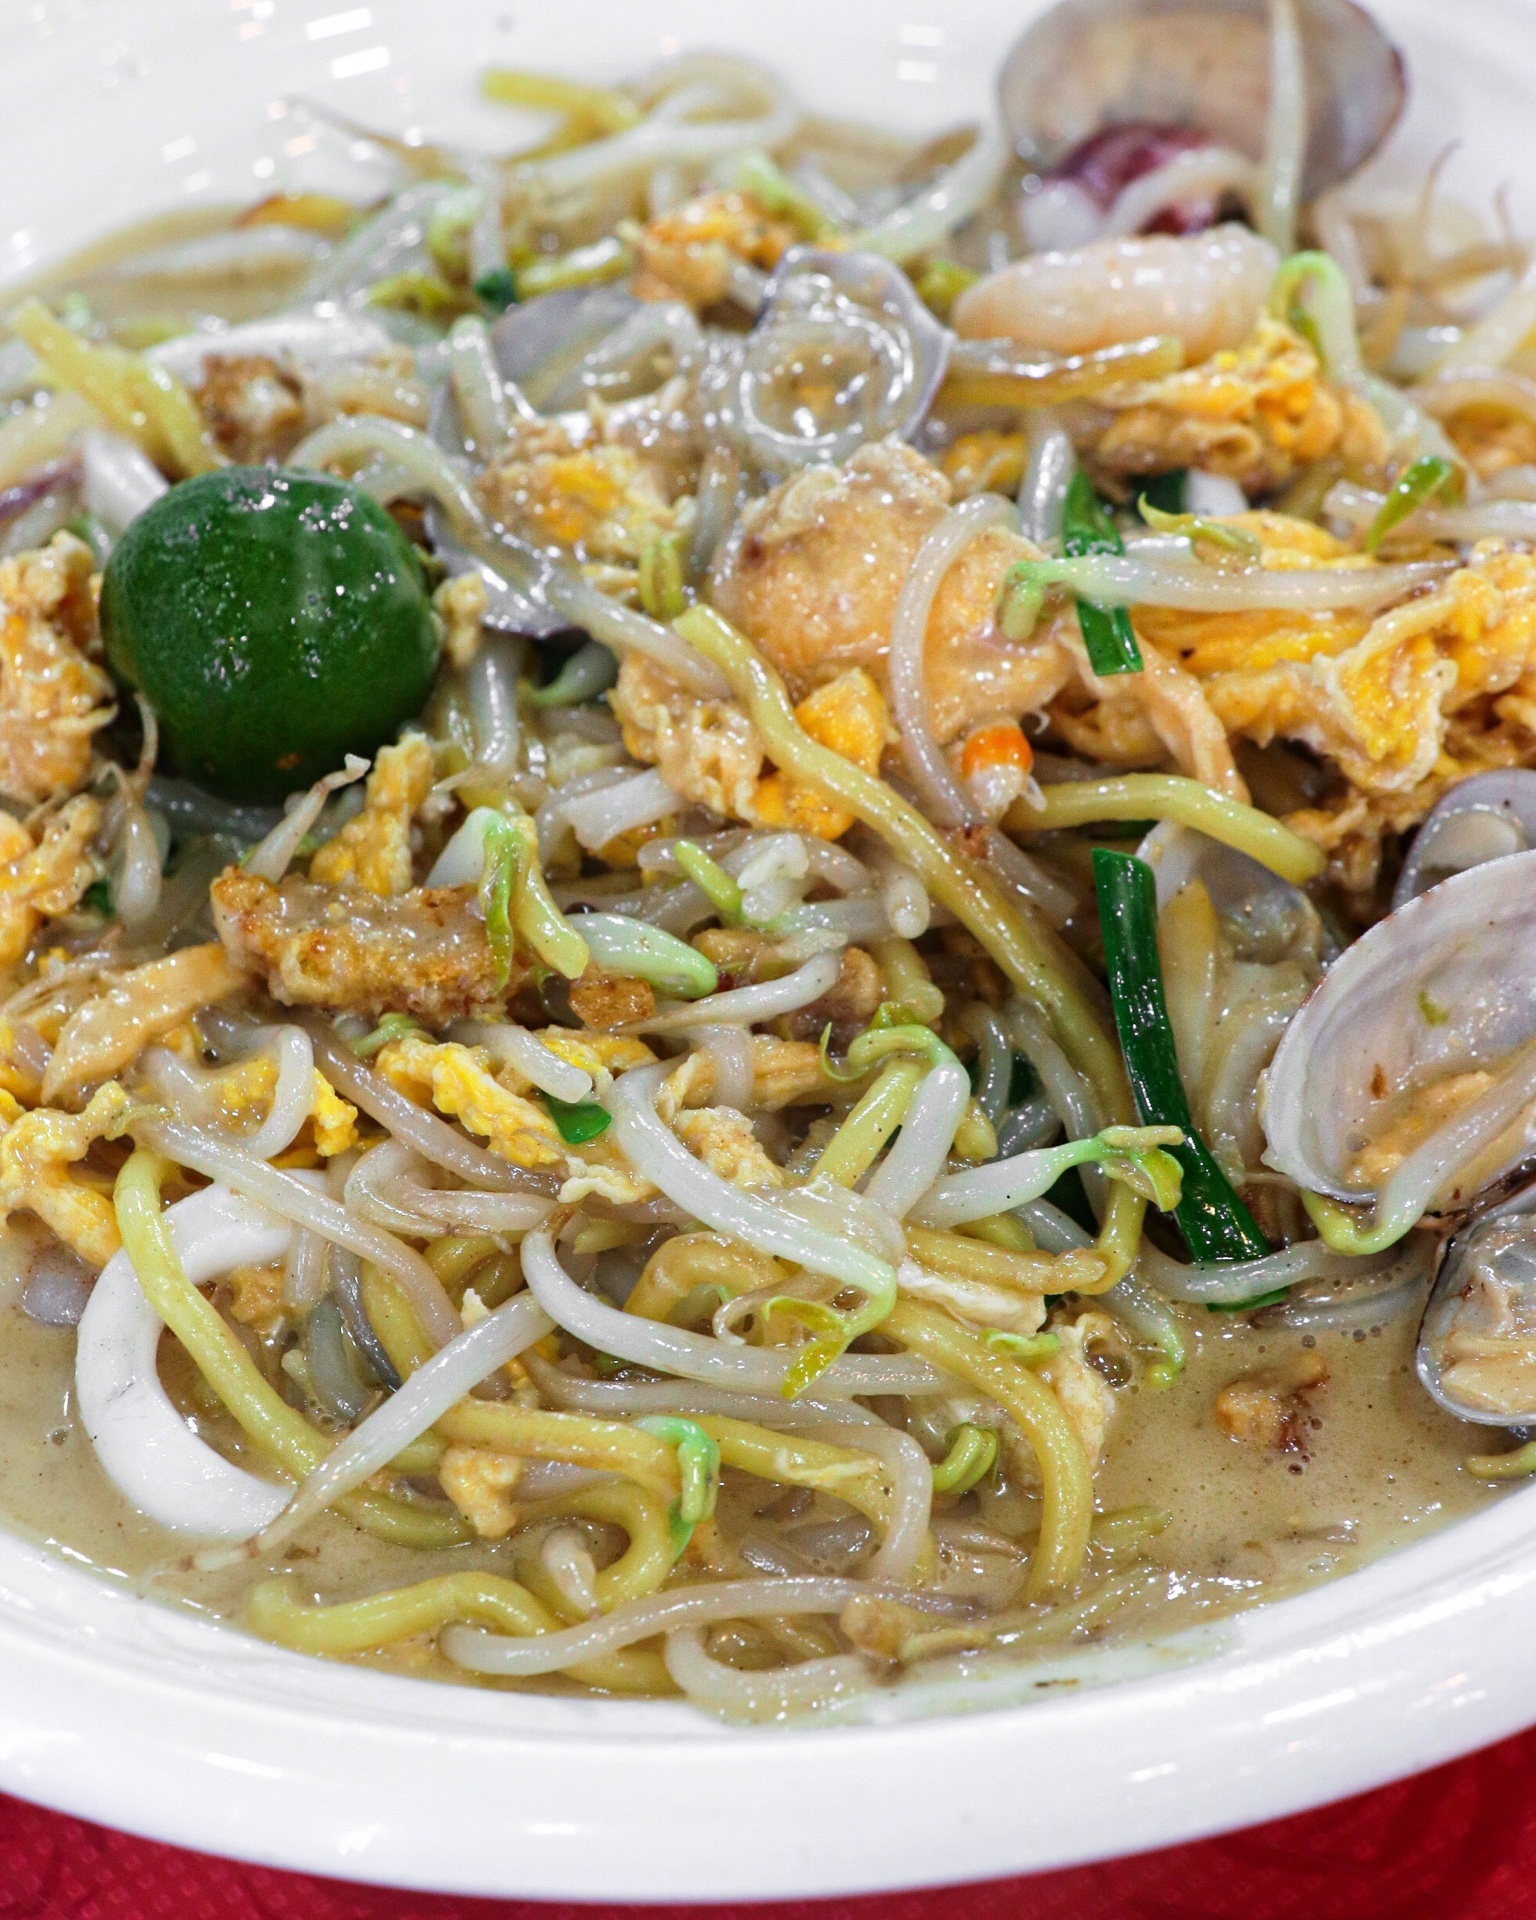 Lala Hokkien Mee at Penang Seafood Restaurant | Burpple